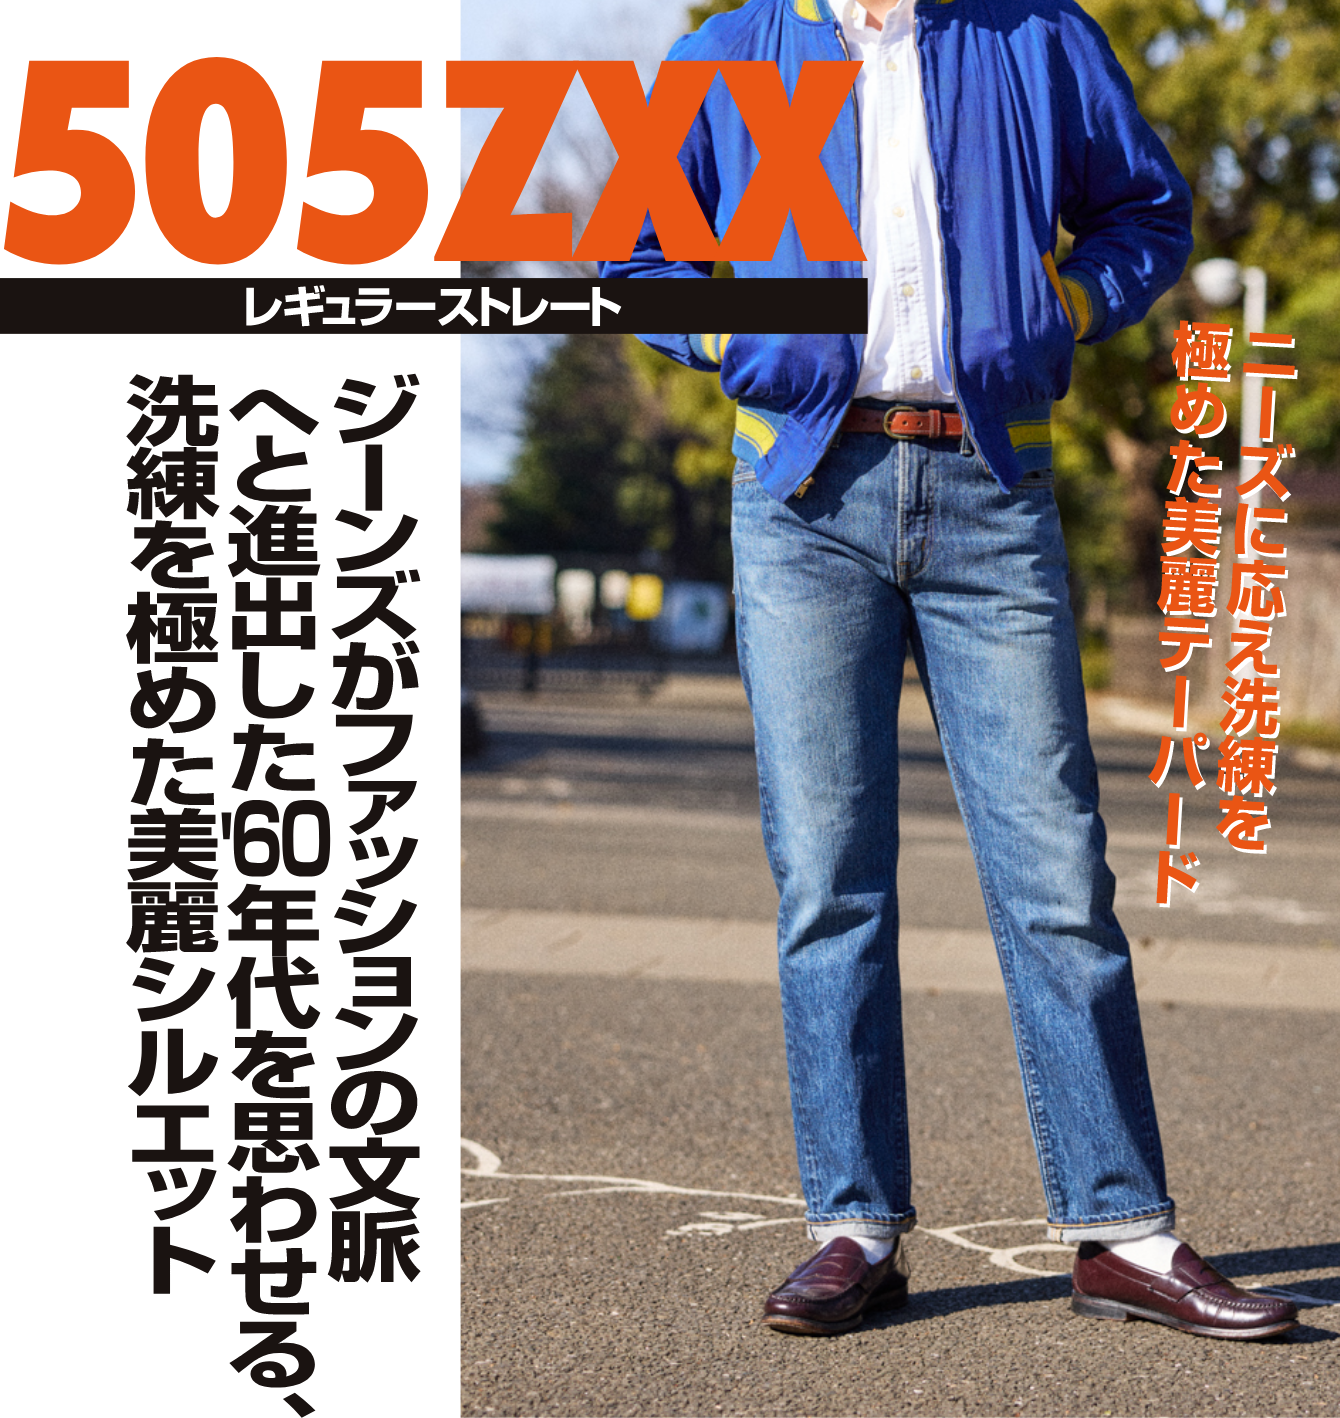 505ZXX レギュラーストレート